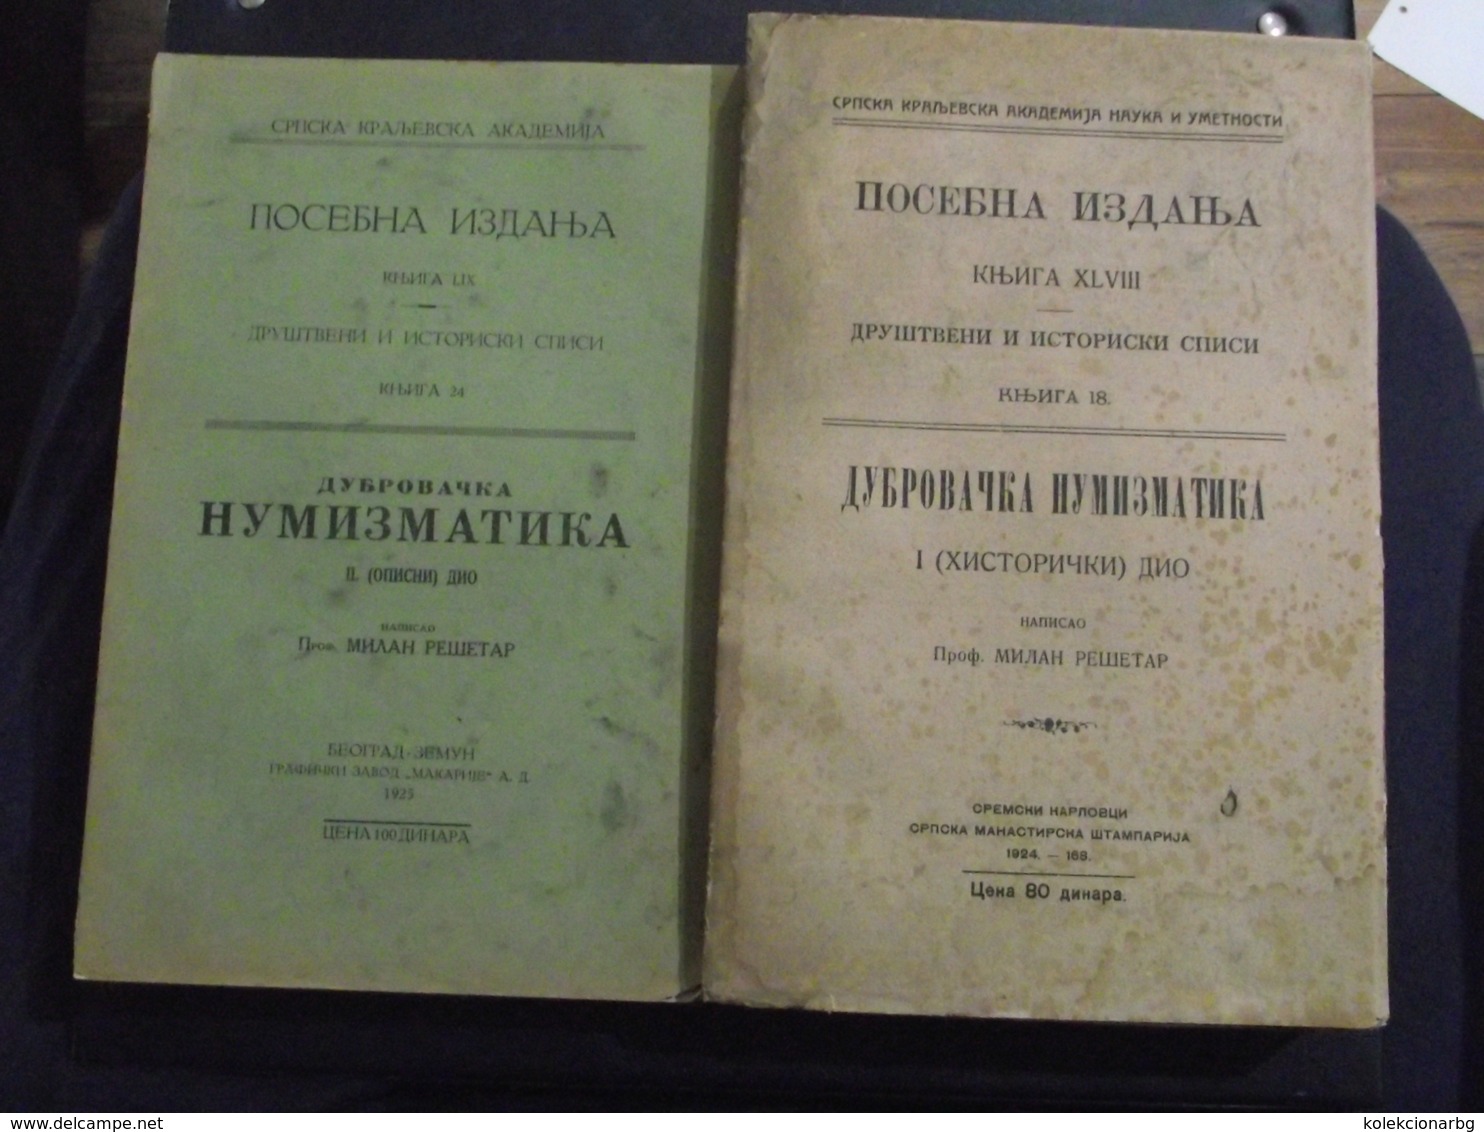 Dubrovacka Numizmatika Dubrovnik Von Resetar Dubrovnik Numismatics Very Rare Books, Excellent Condition - Old Books